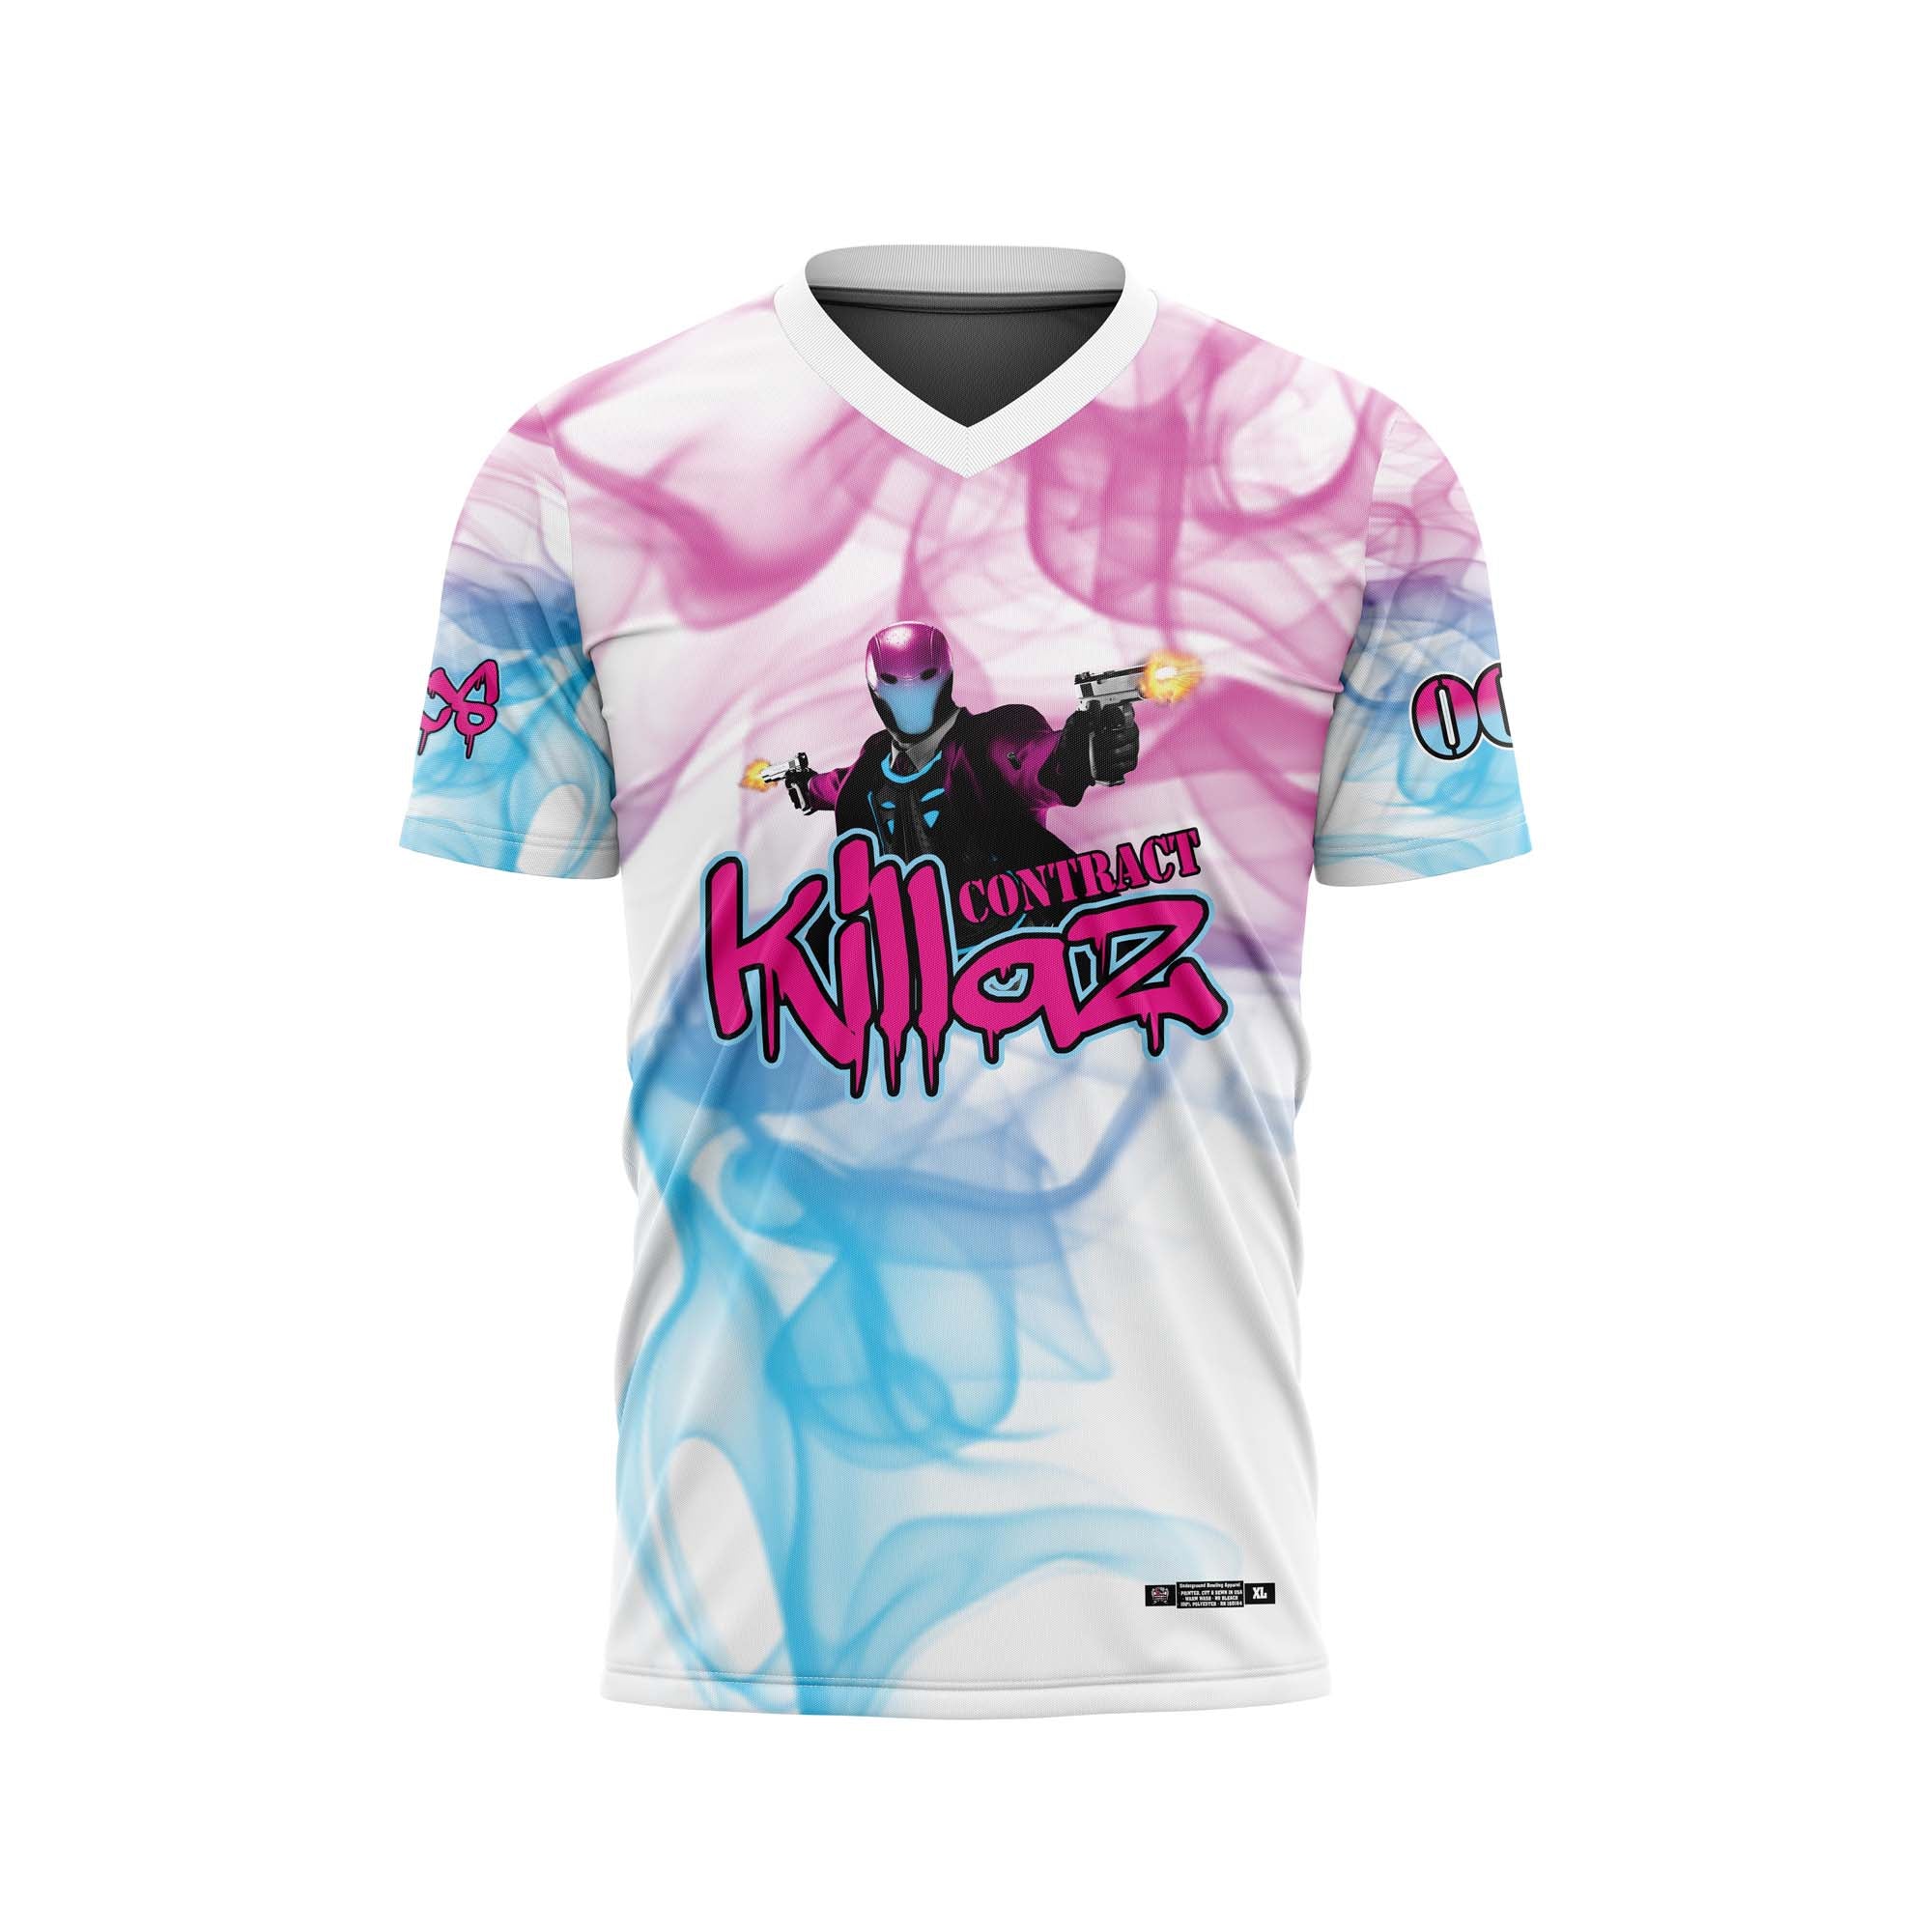 Contract Killaz Tie-Dye Jersey